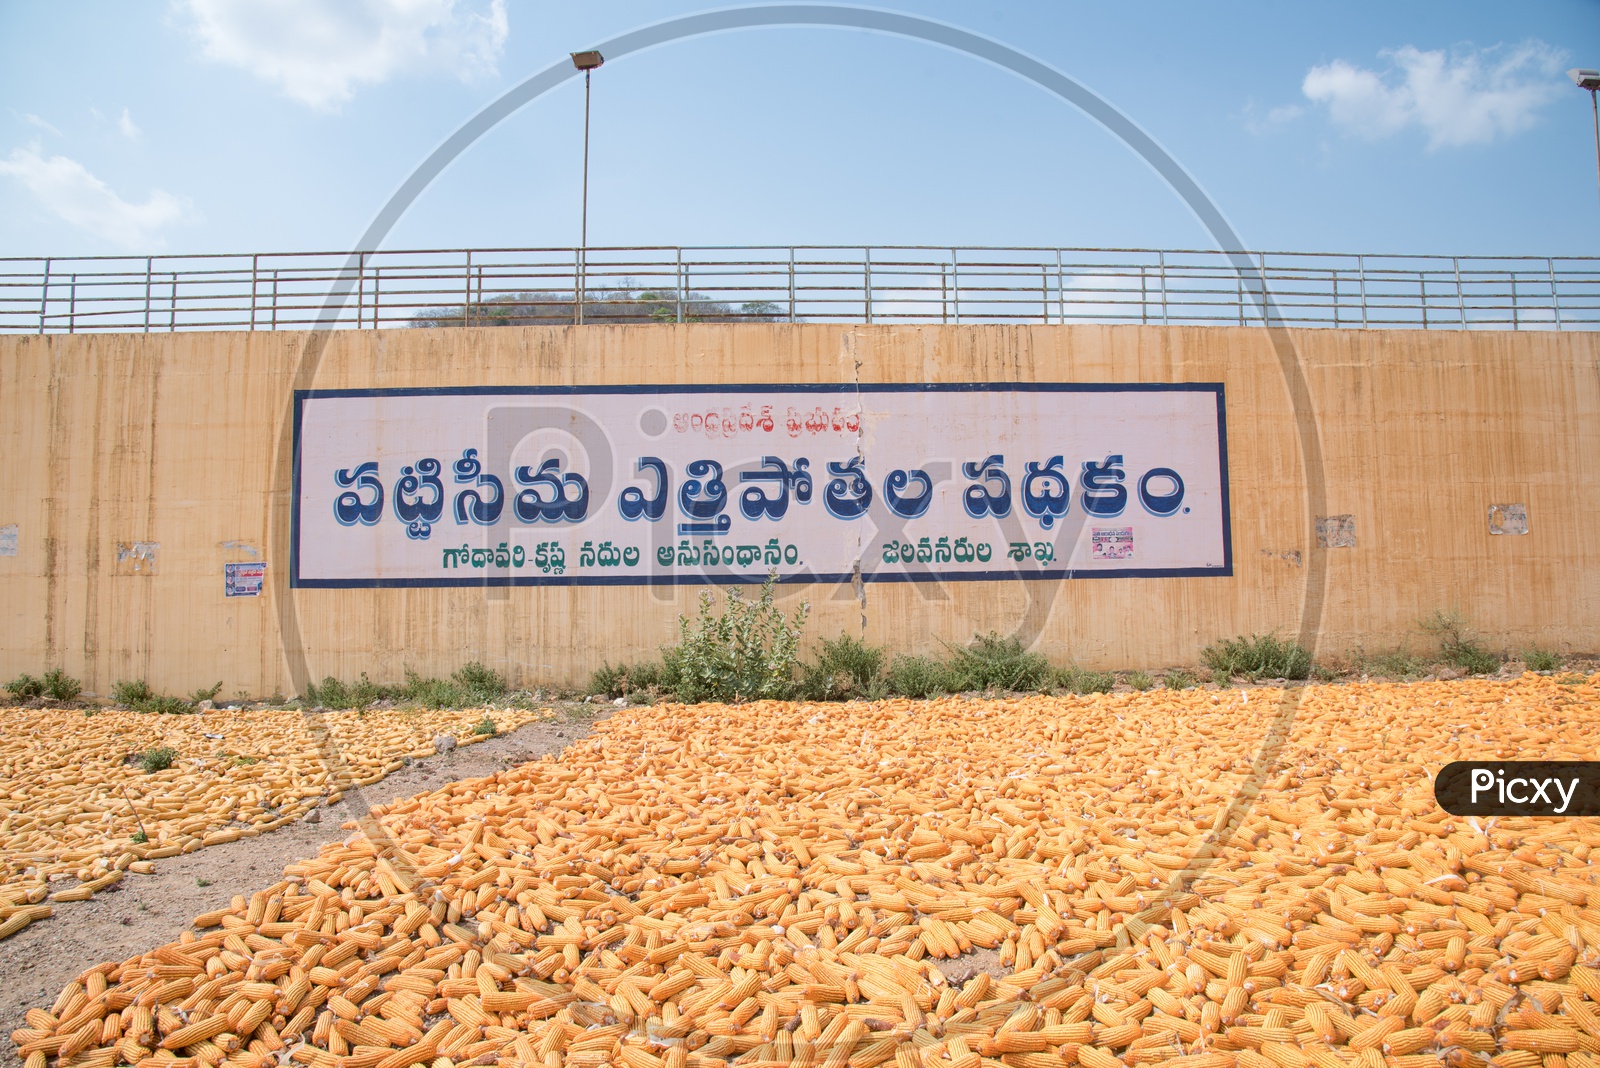 Pattiseema Lift Irrigation Project( Pattiseema Ethipothala Pathakam).